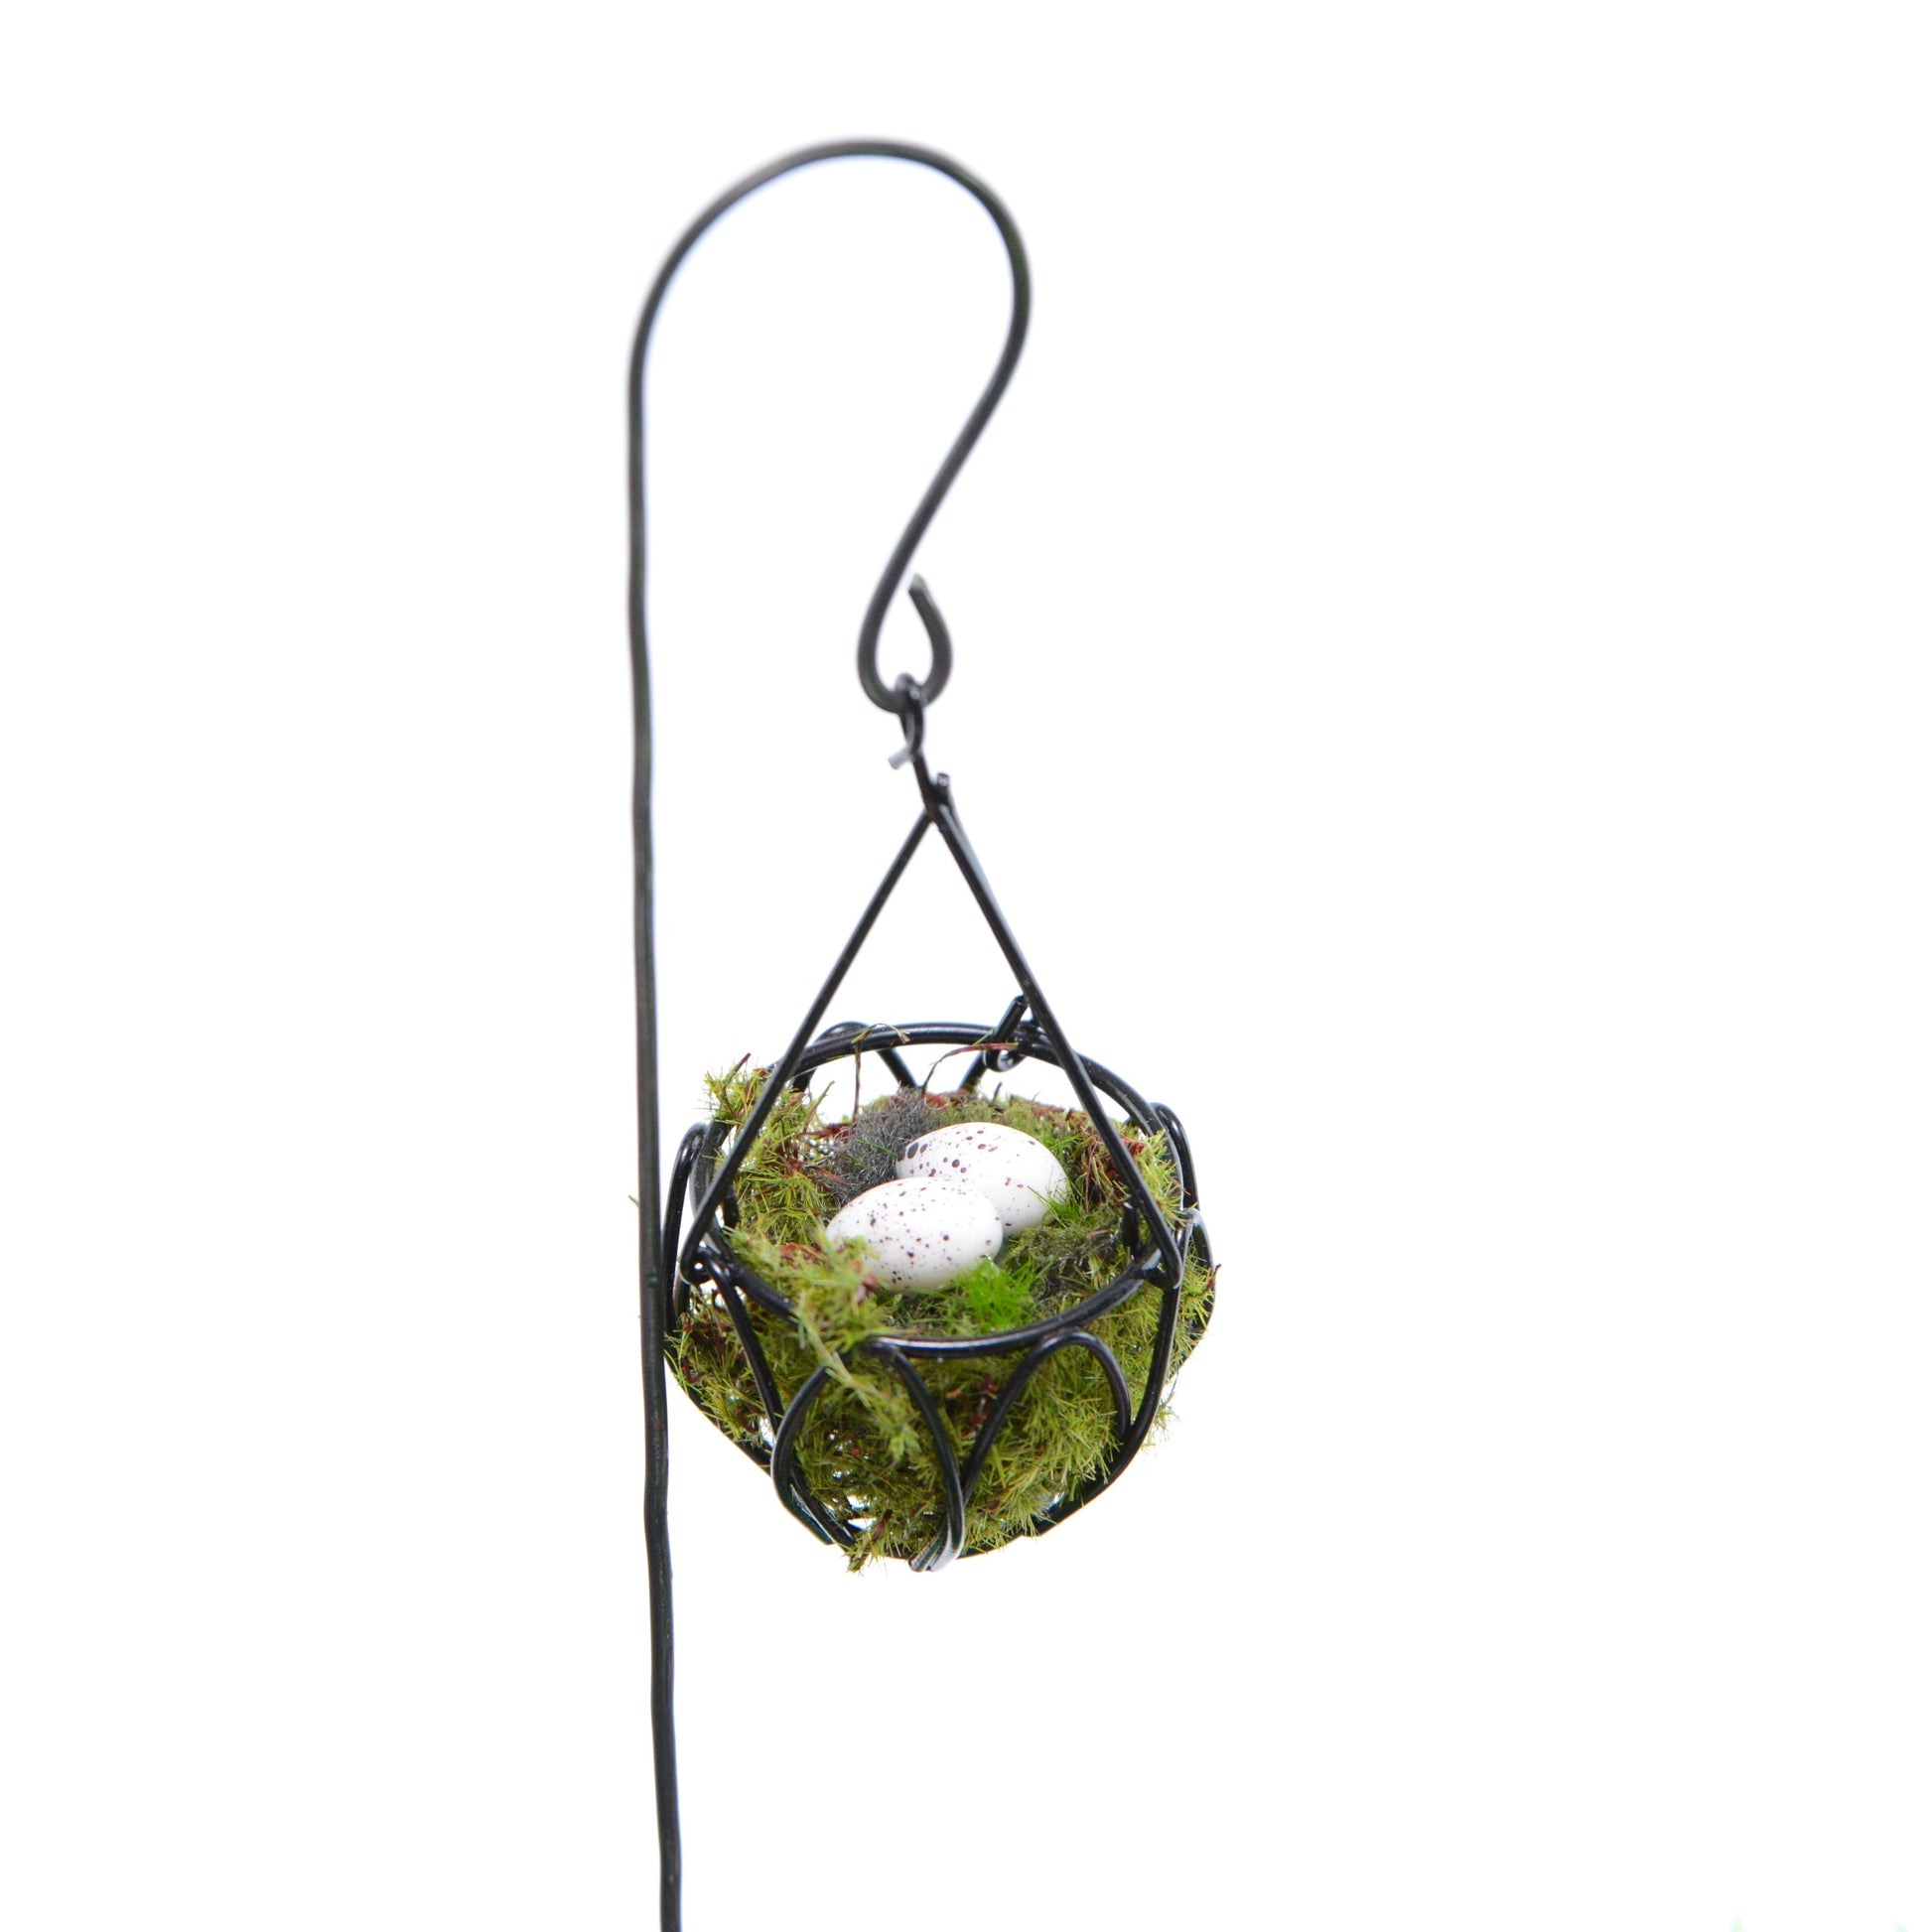 Fairy Garden Mini Hanging Basket - Fairy Garden Accessory